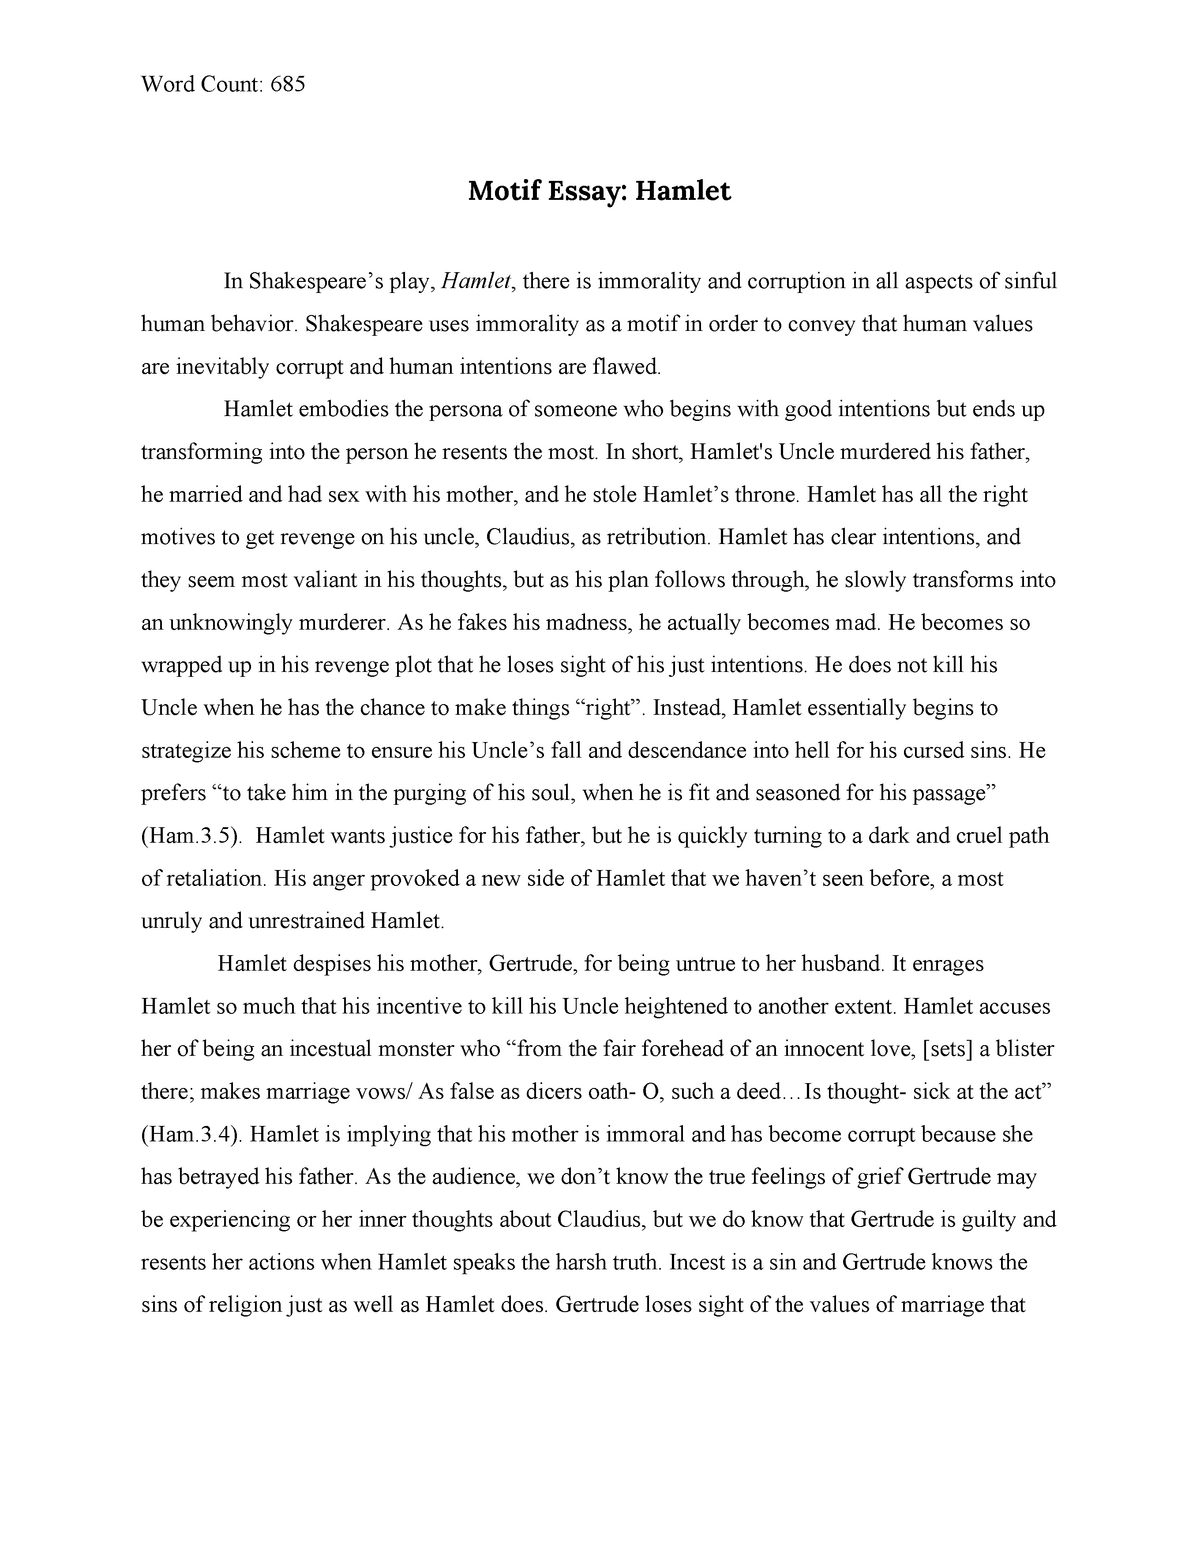 Реферат: Hamlet Essay Research Paper True redemption of